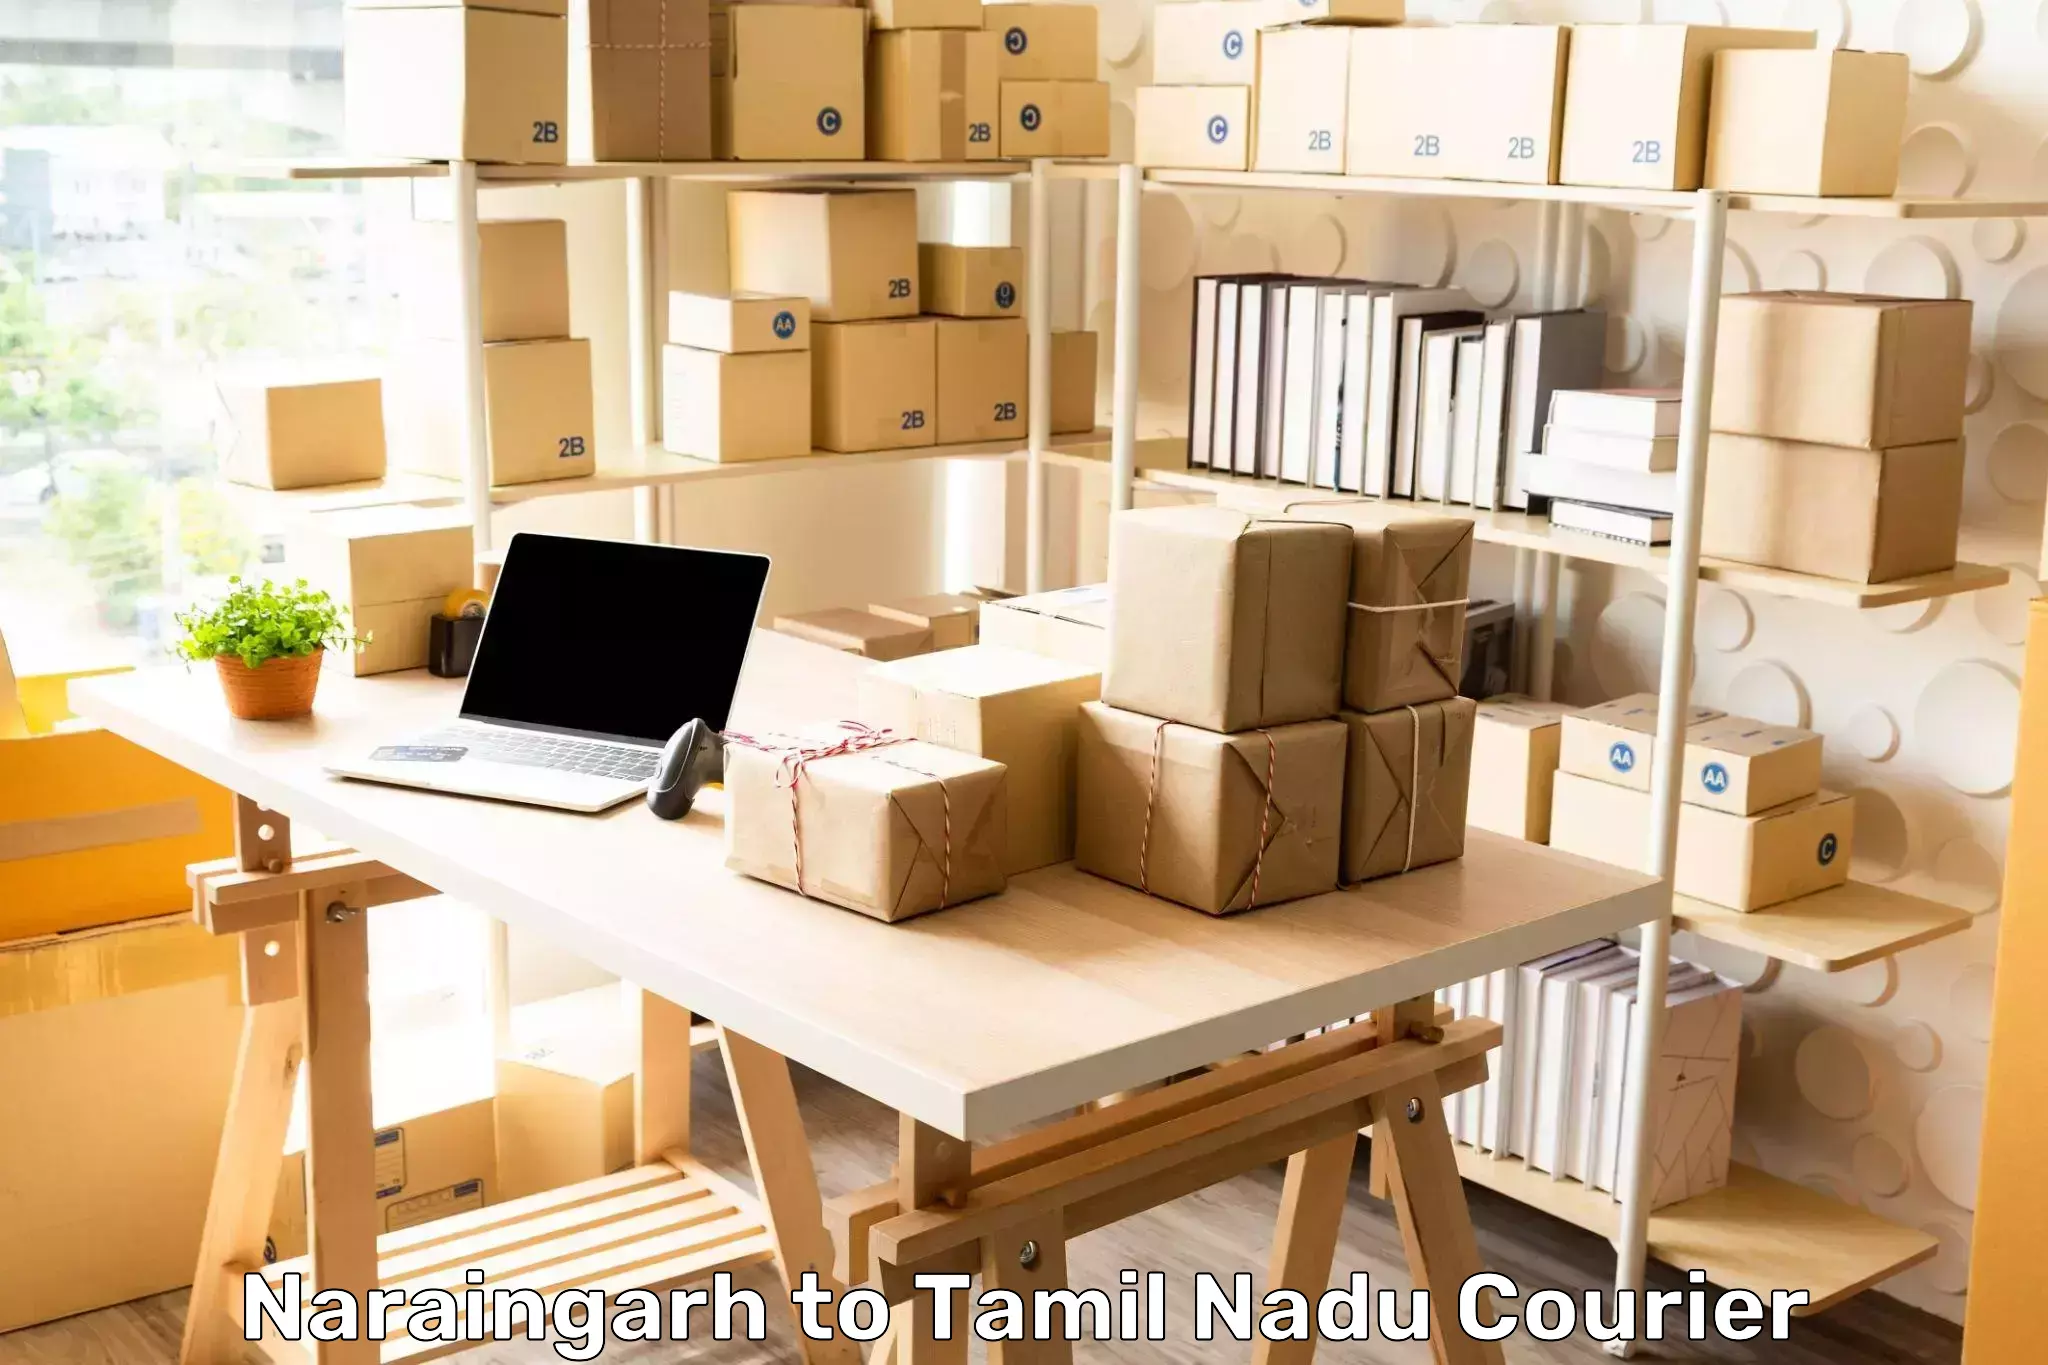 Logistics service provider Naraingarh to Tiruvannamalai